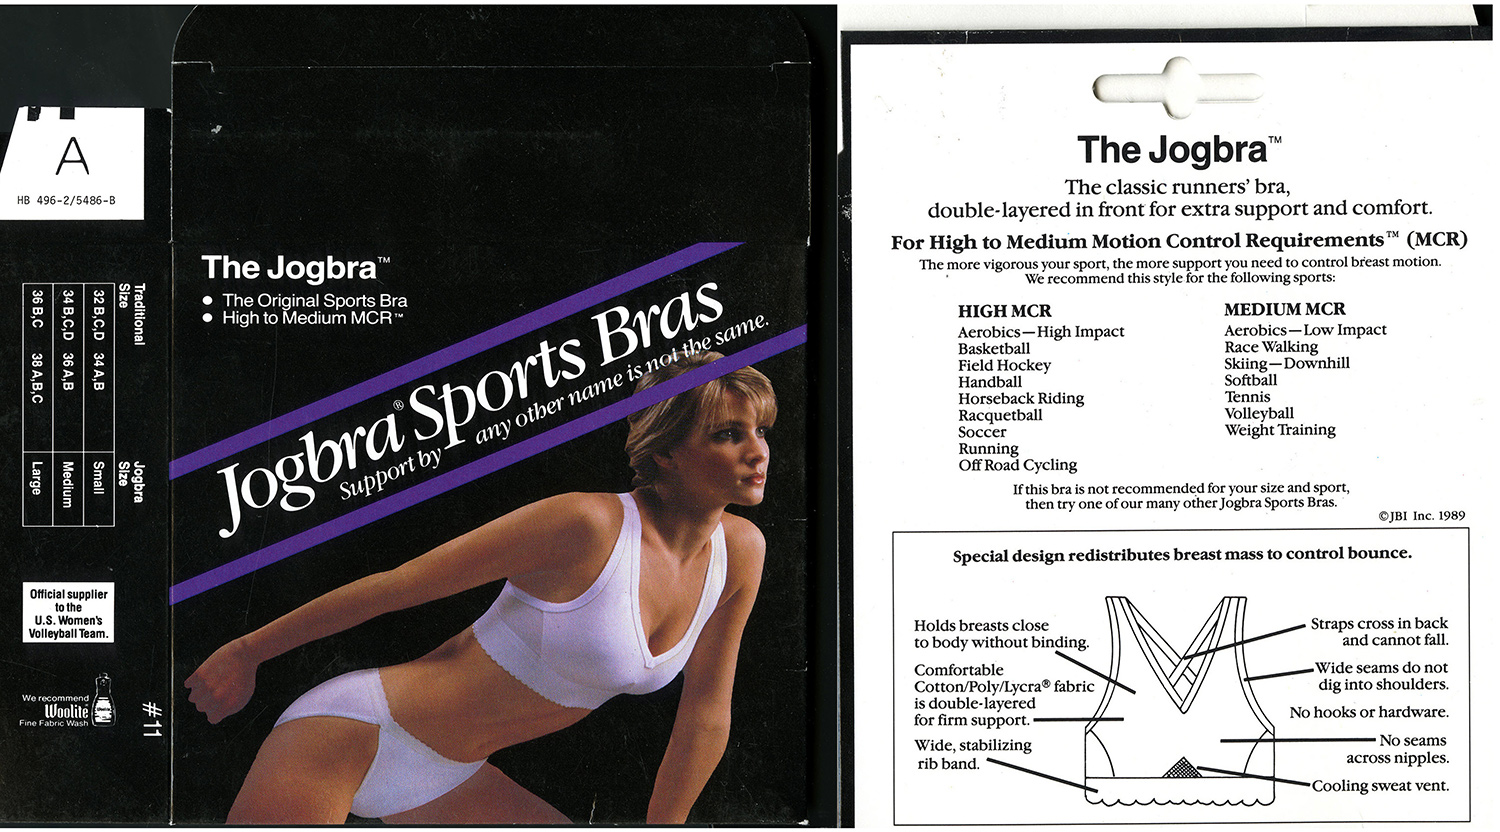 From The 'Jockbra' To Brandi Chastain: The History Of The Sports Bra